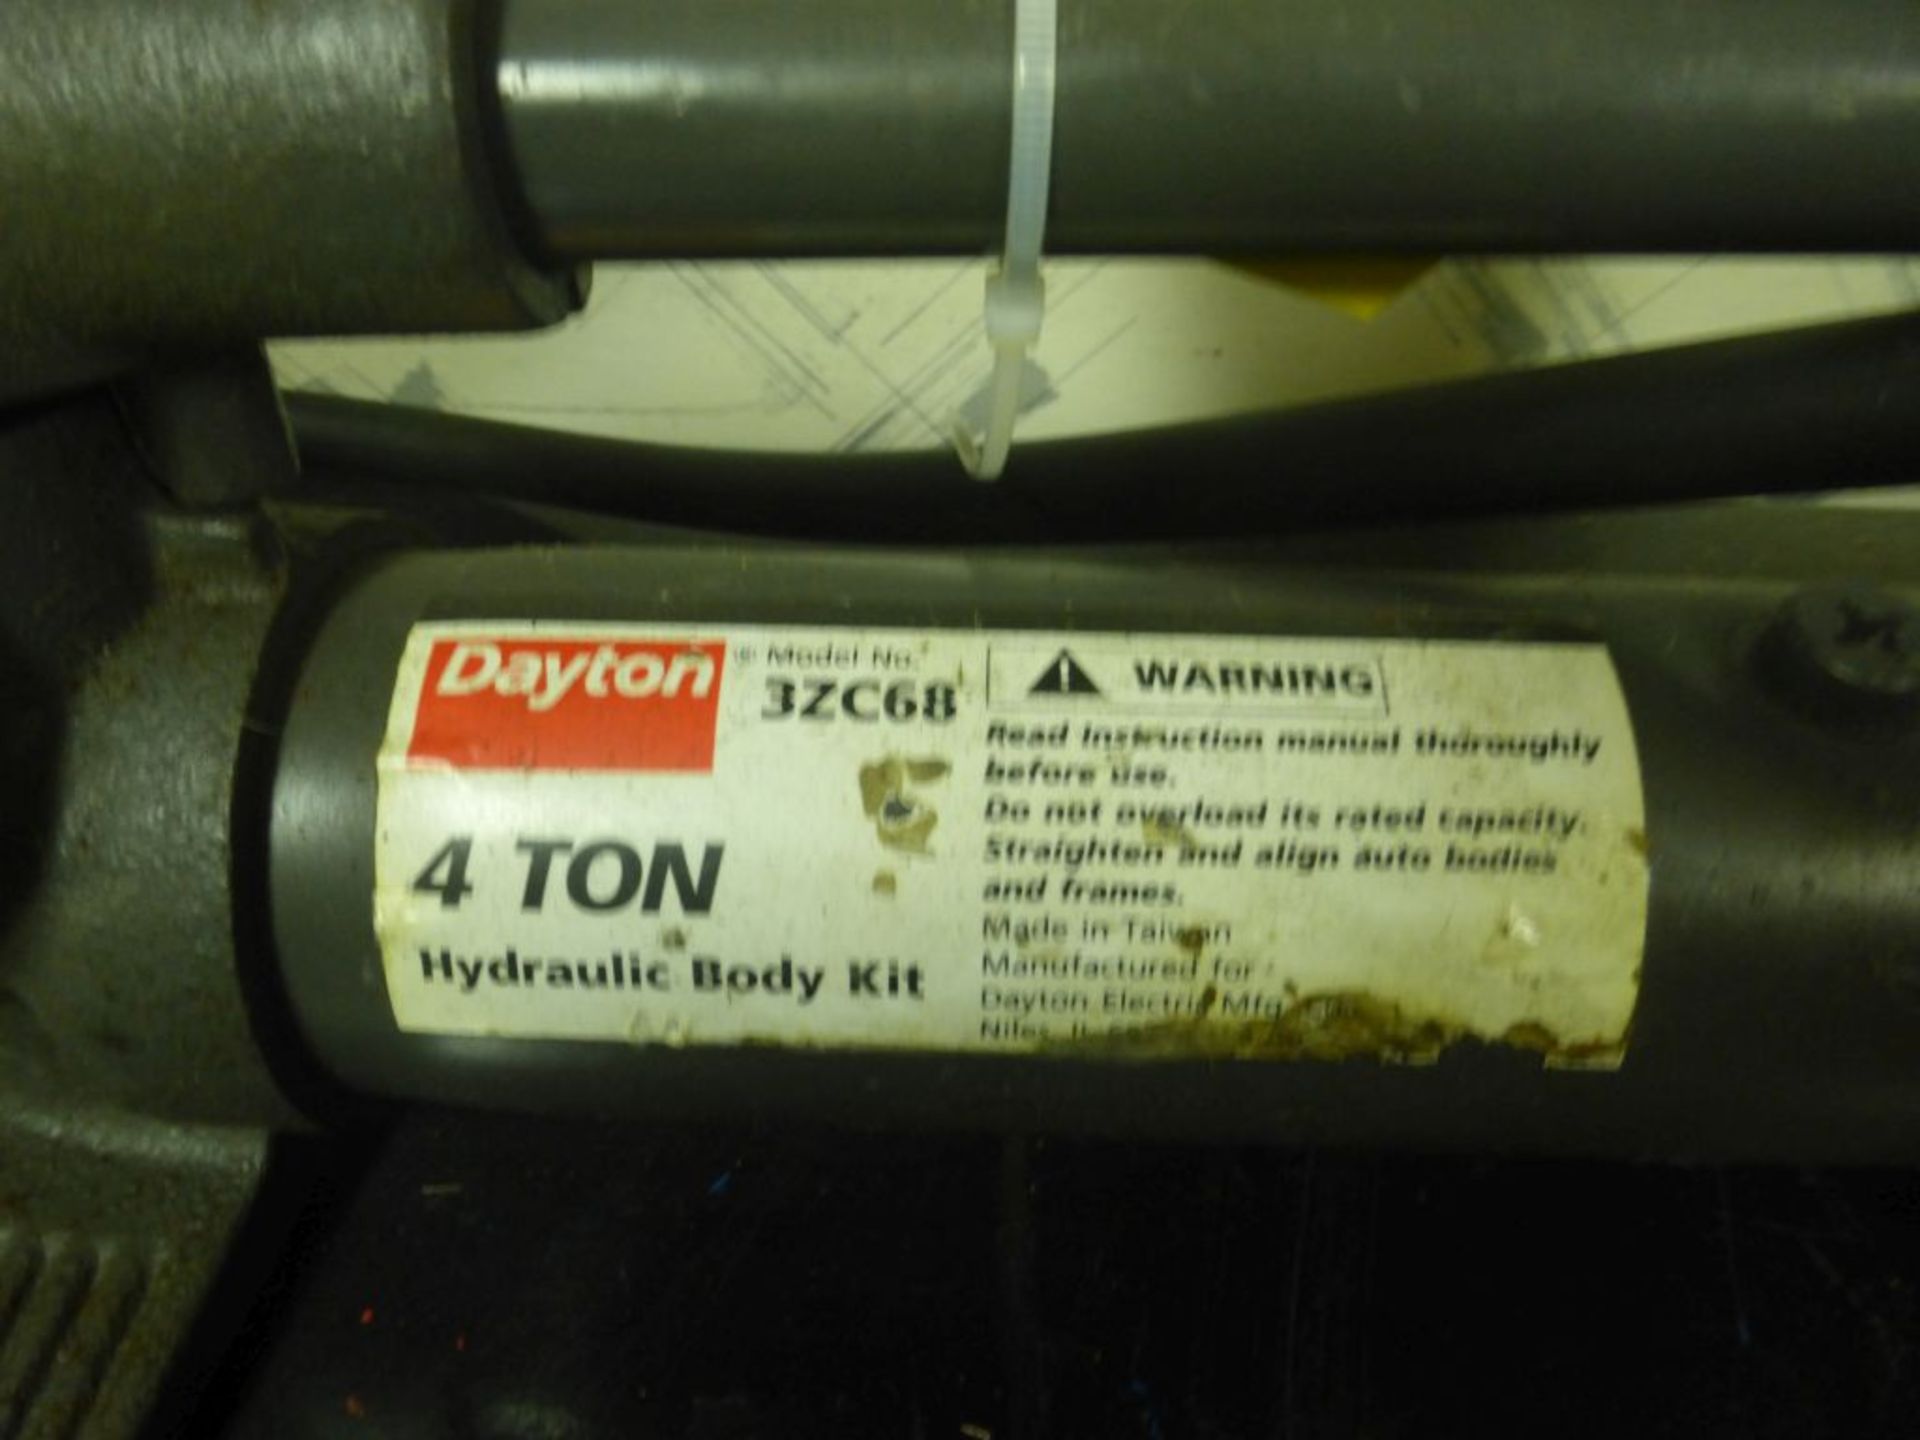 Dayton 4 Ton Hydraulic Body Kit|Model No. 3ZC68 - Image 2 of 3